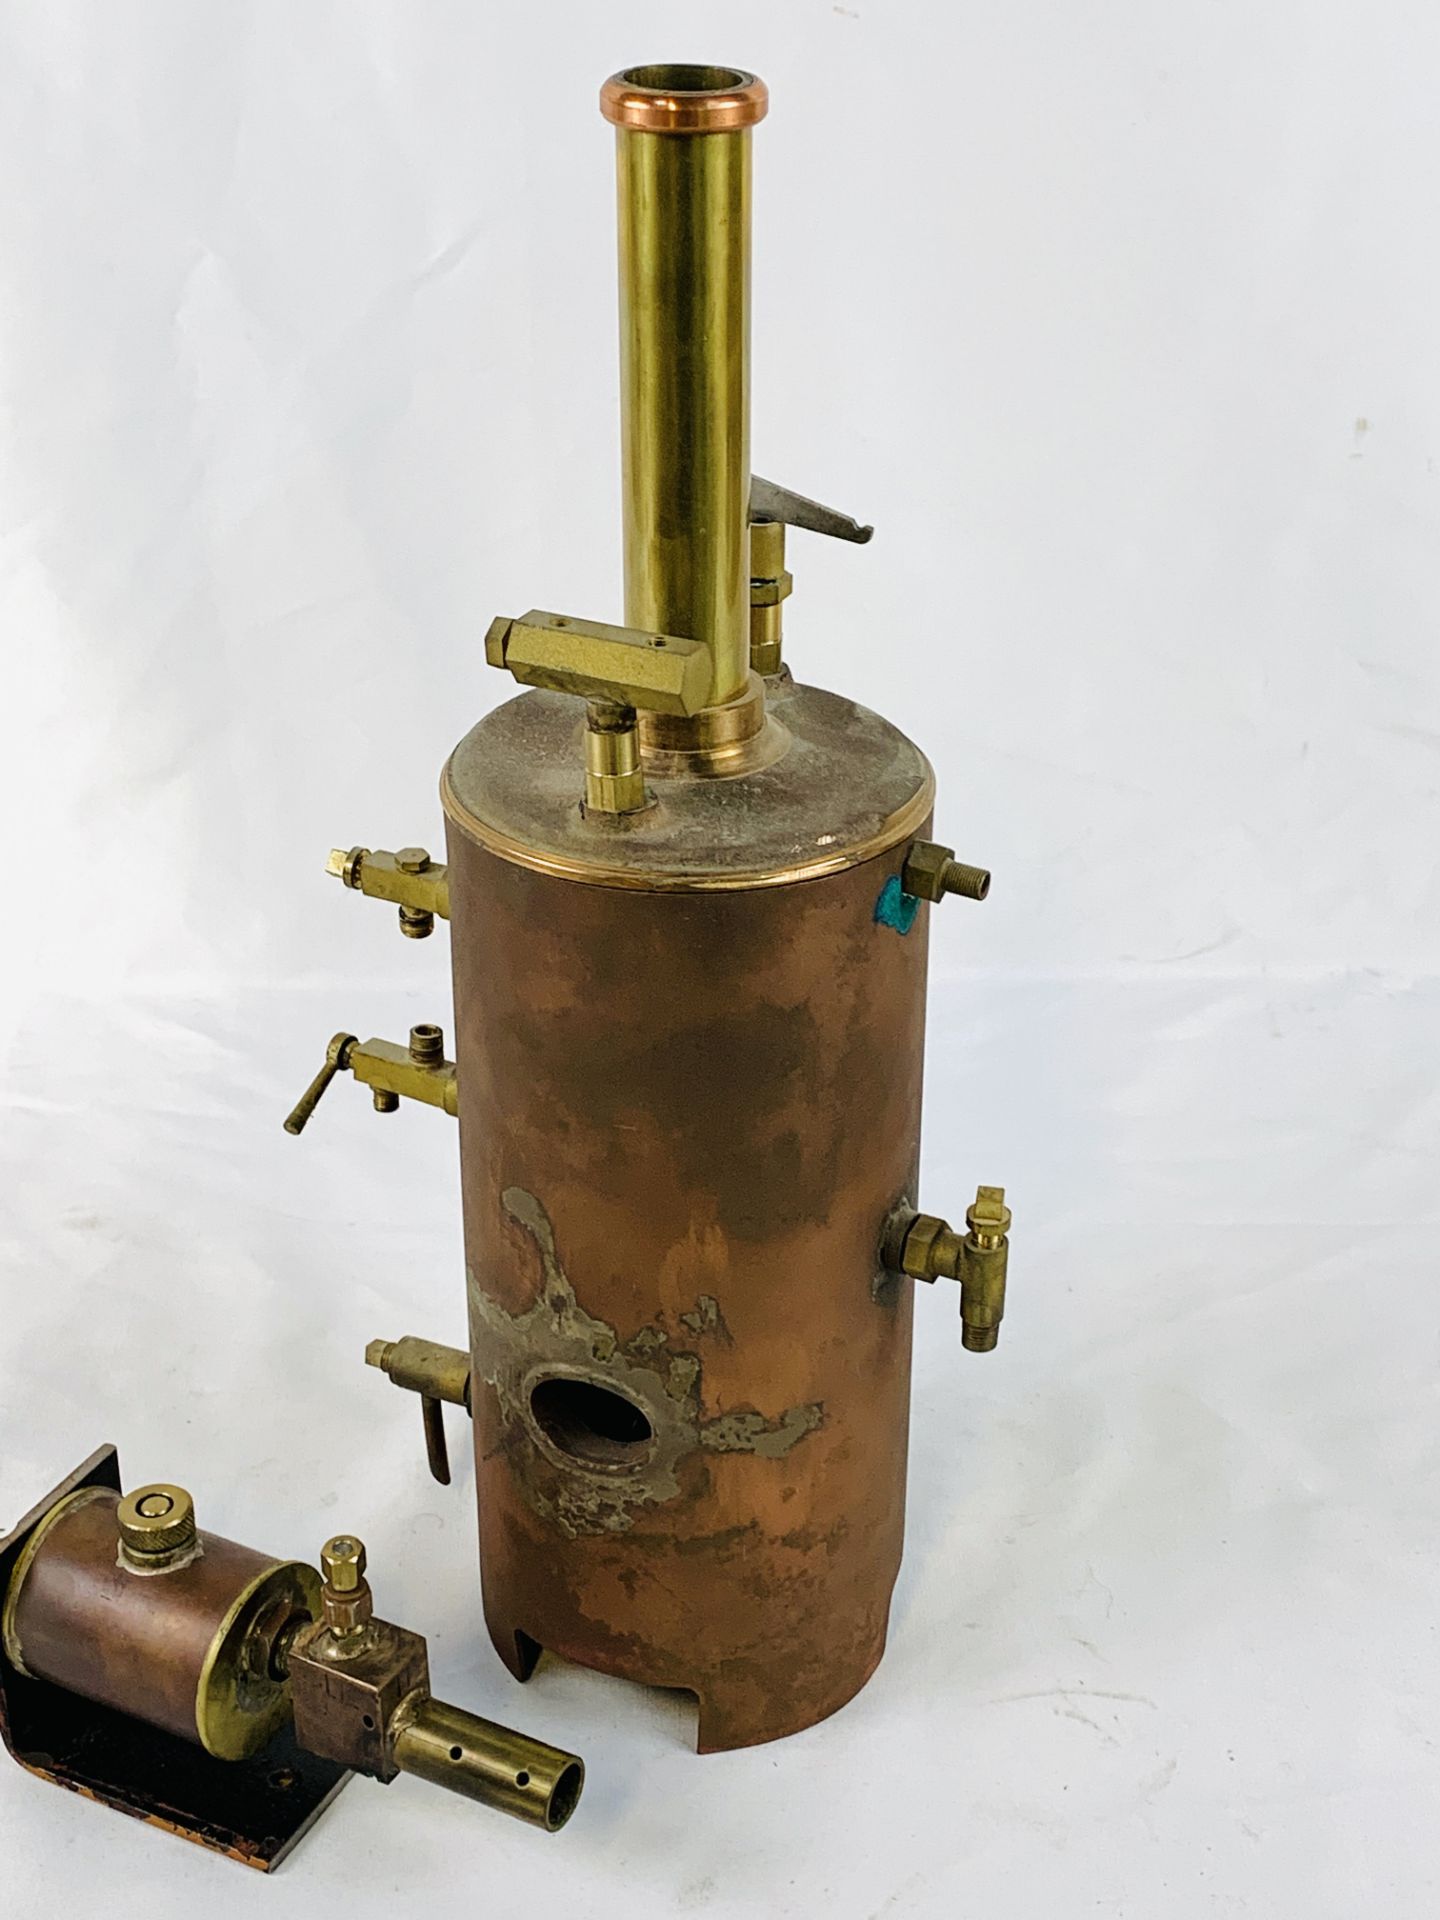 Copper boiler with plans by Kenison Bros (Hertford) Ltd. - Image 3 of 3